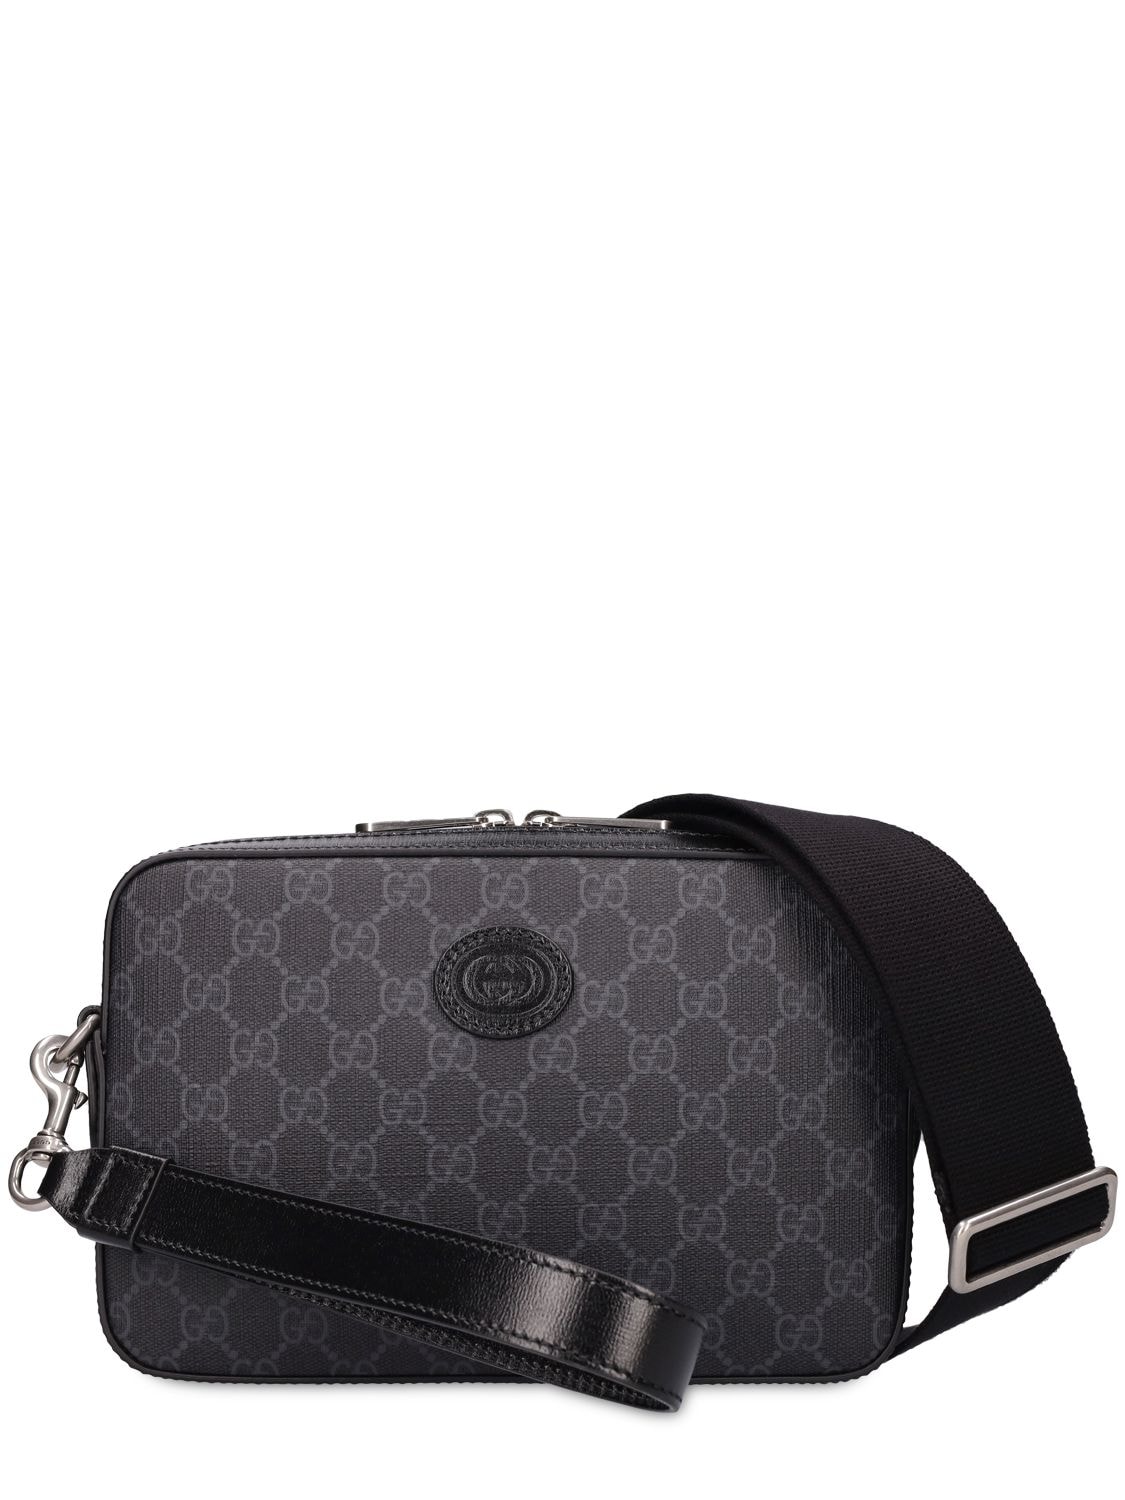 Gucci Canvas Messenger Bag In Black